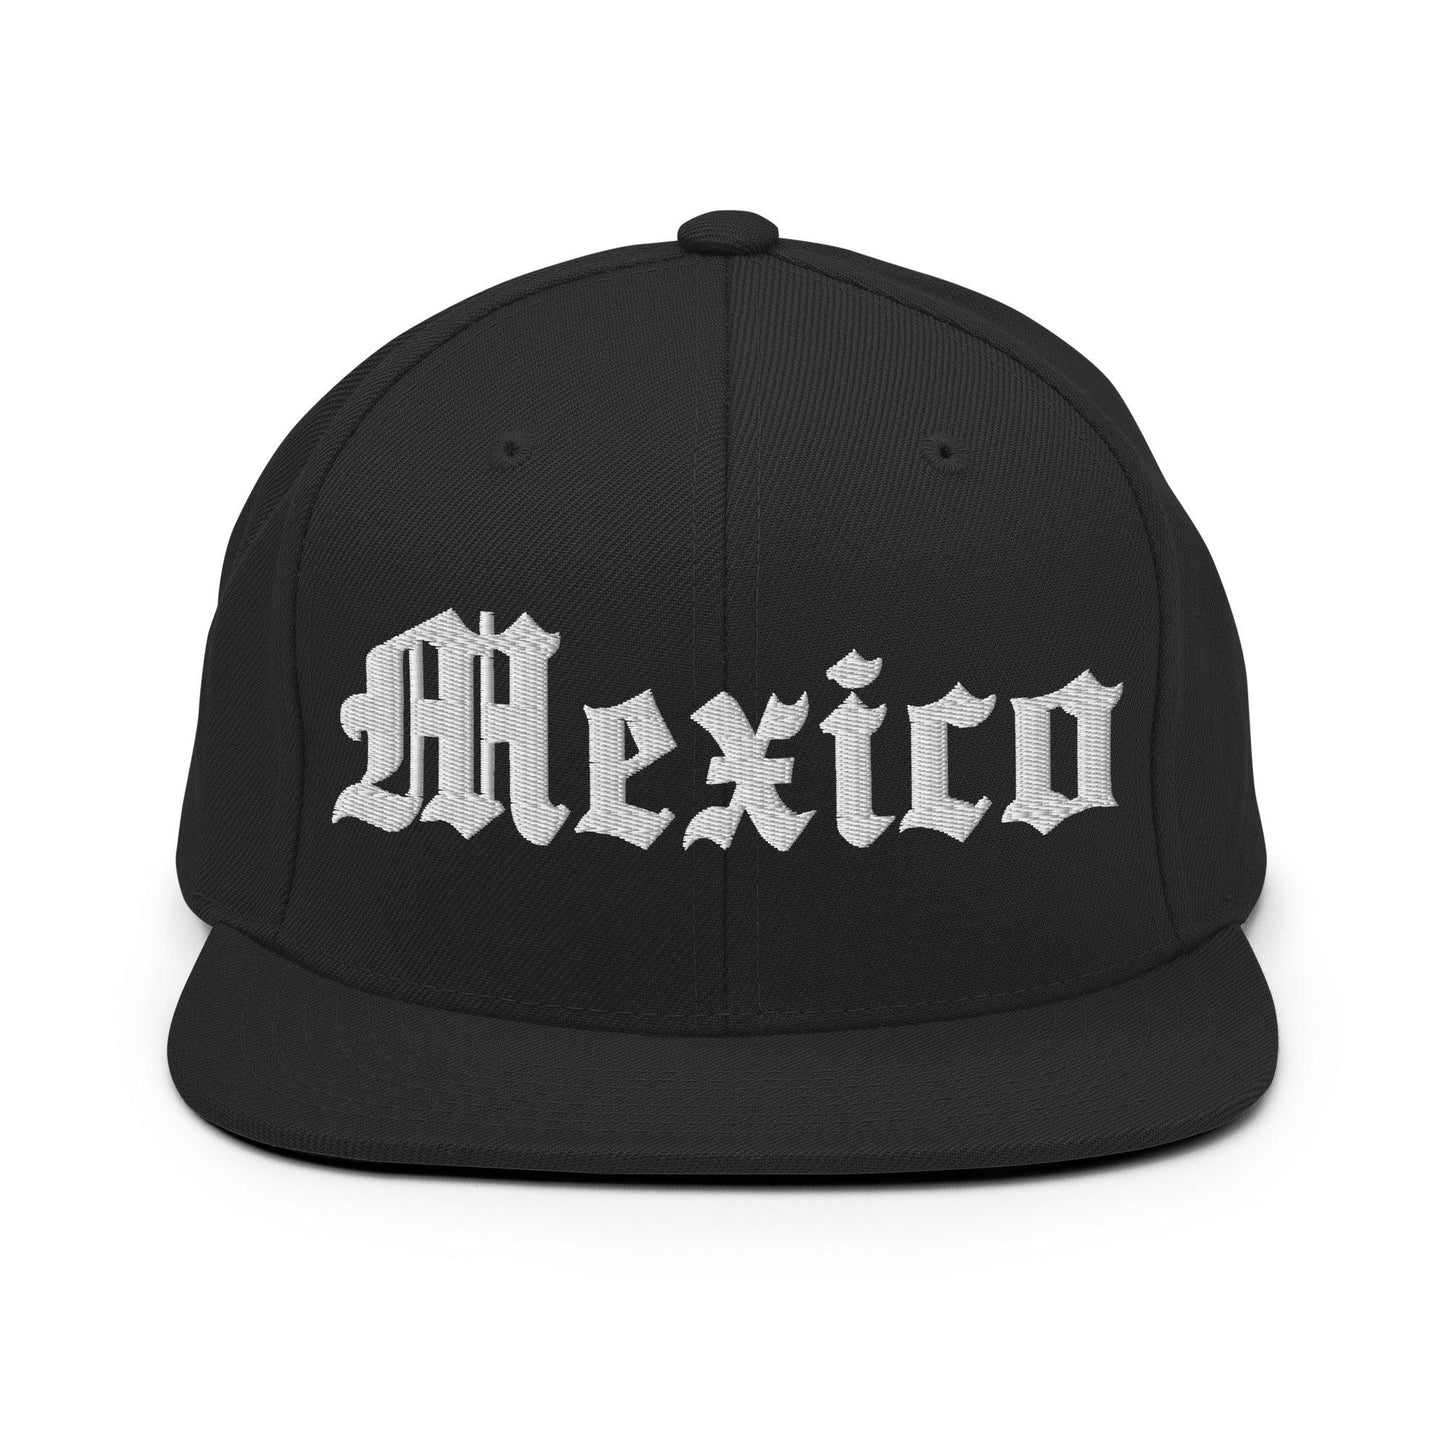 Mexico Old English Snapback Hat Black